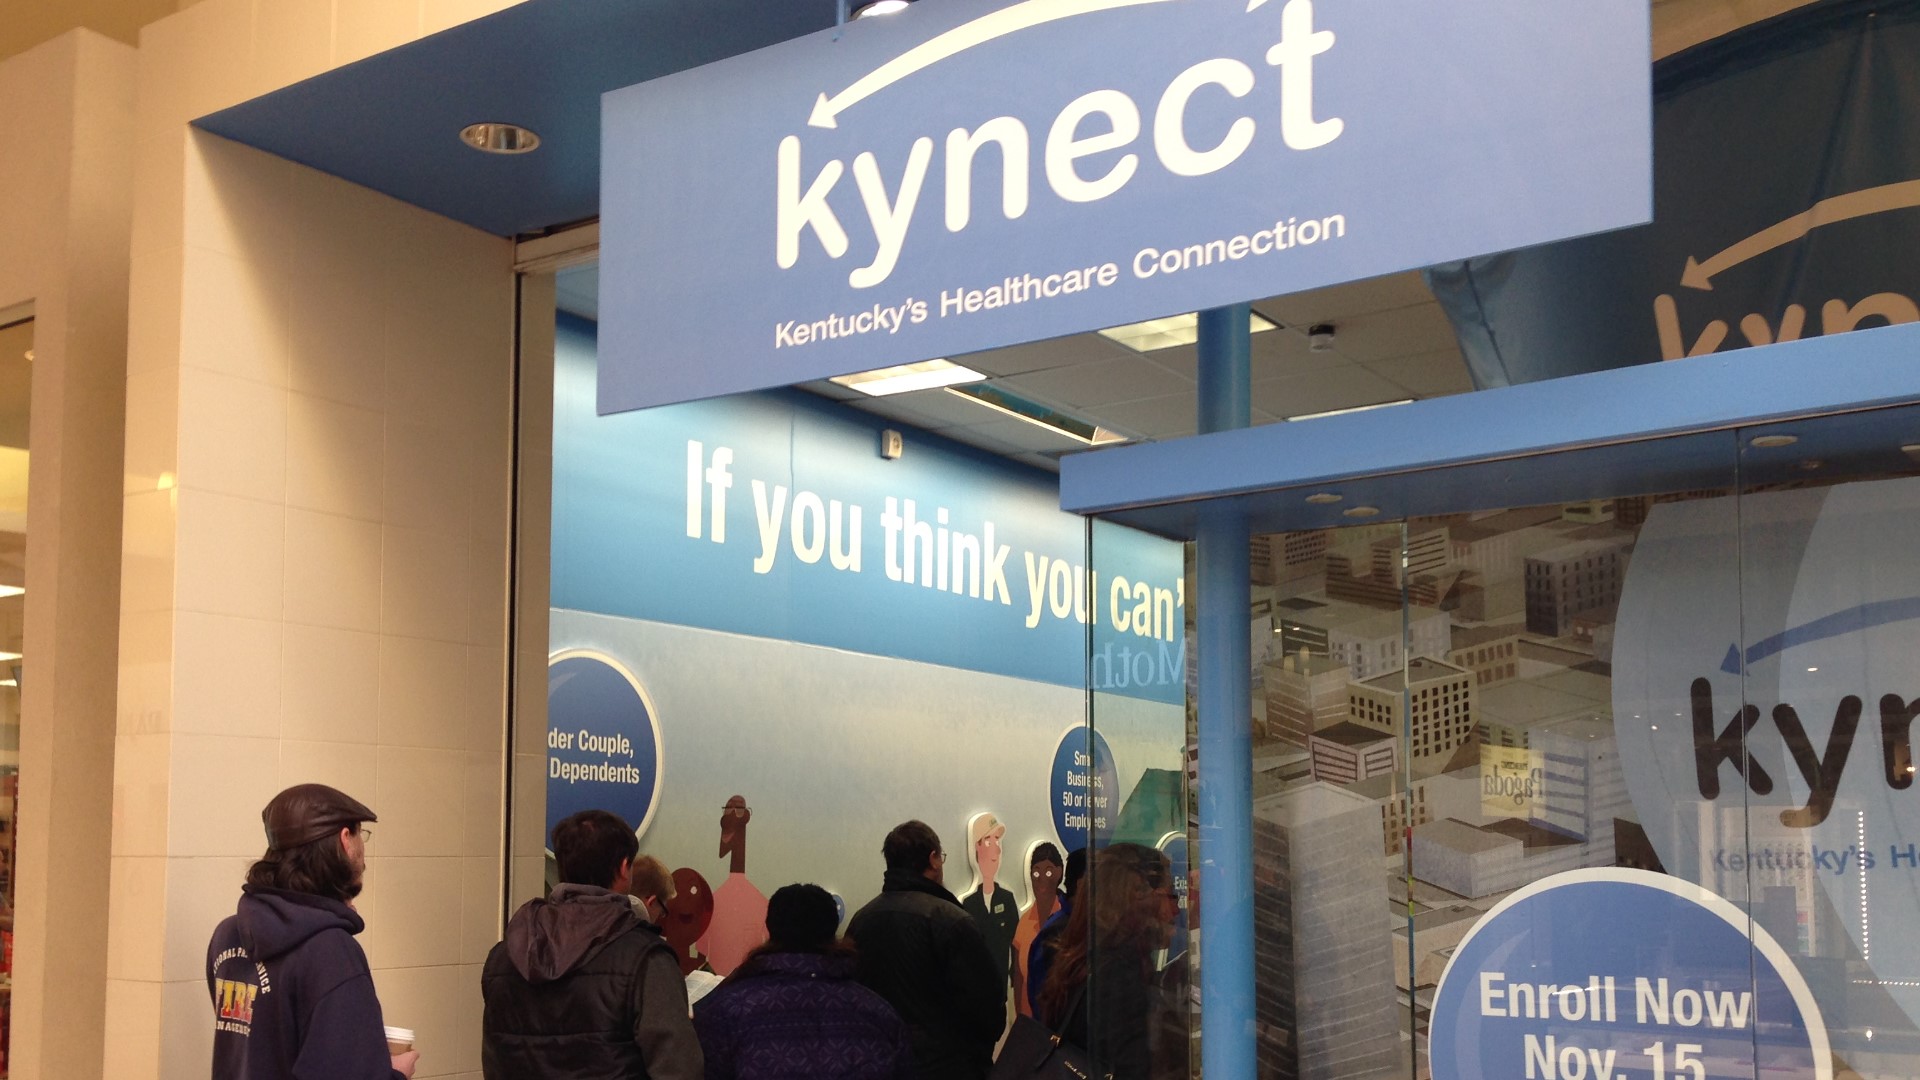 Kynect open for enrollment for Kentuckians